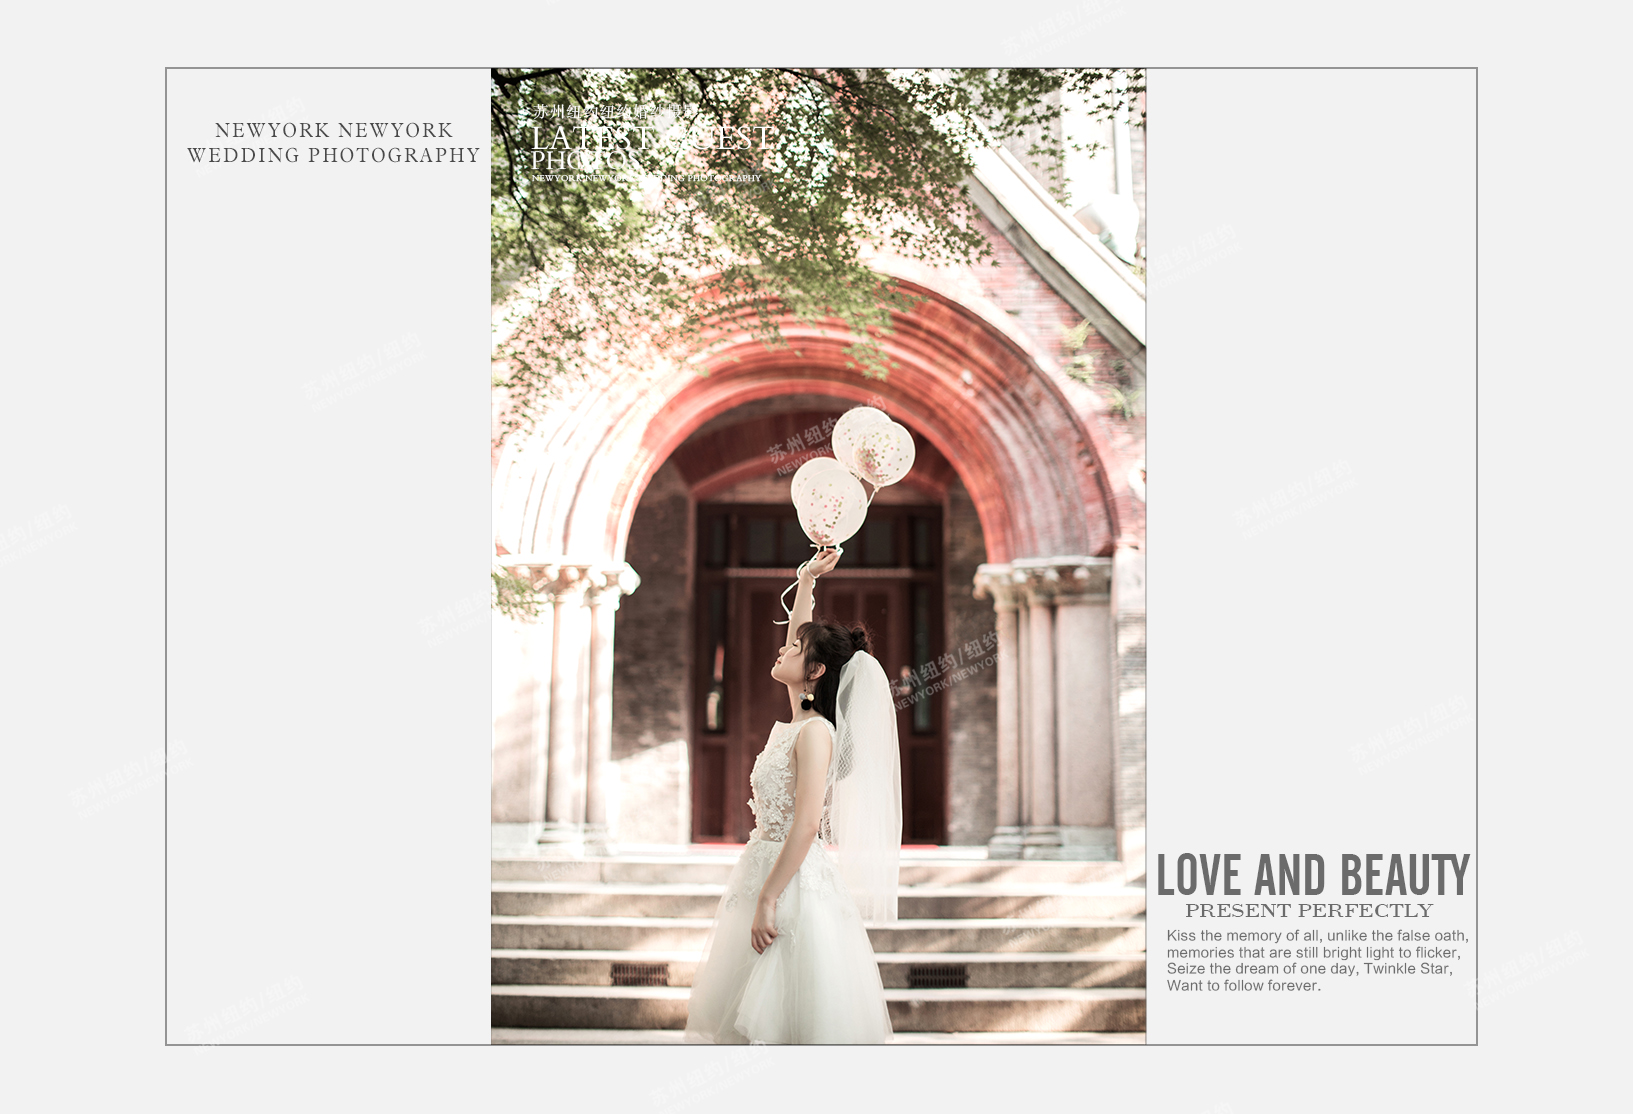 Mr.李 & Ms.陆（纽约纽约最新客照）婚纱摄影照